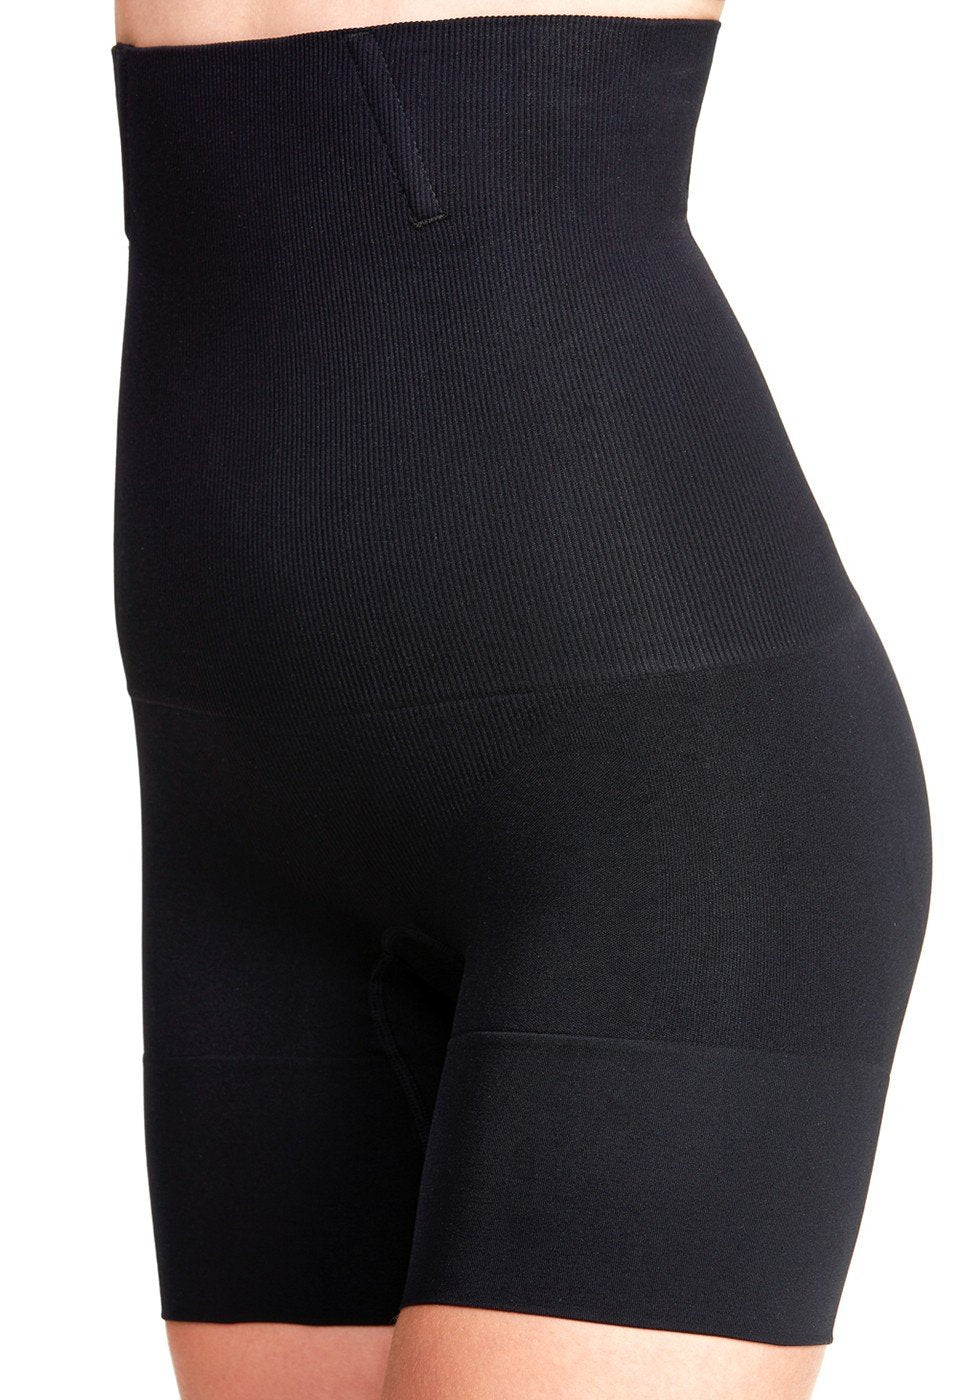 Vaslanda-Shapewear Cintura Alta para Mulheres, Shorts De Controle